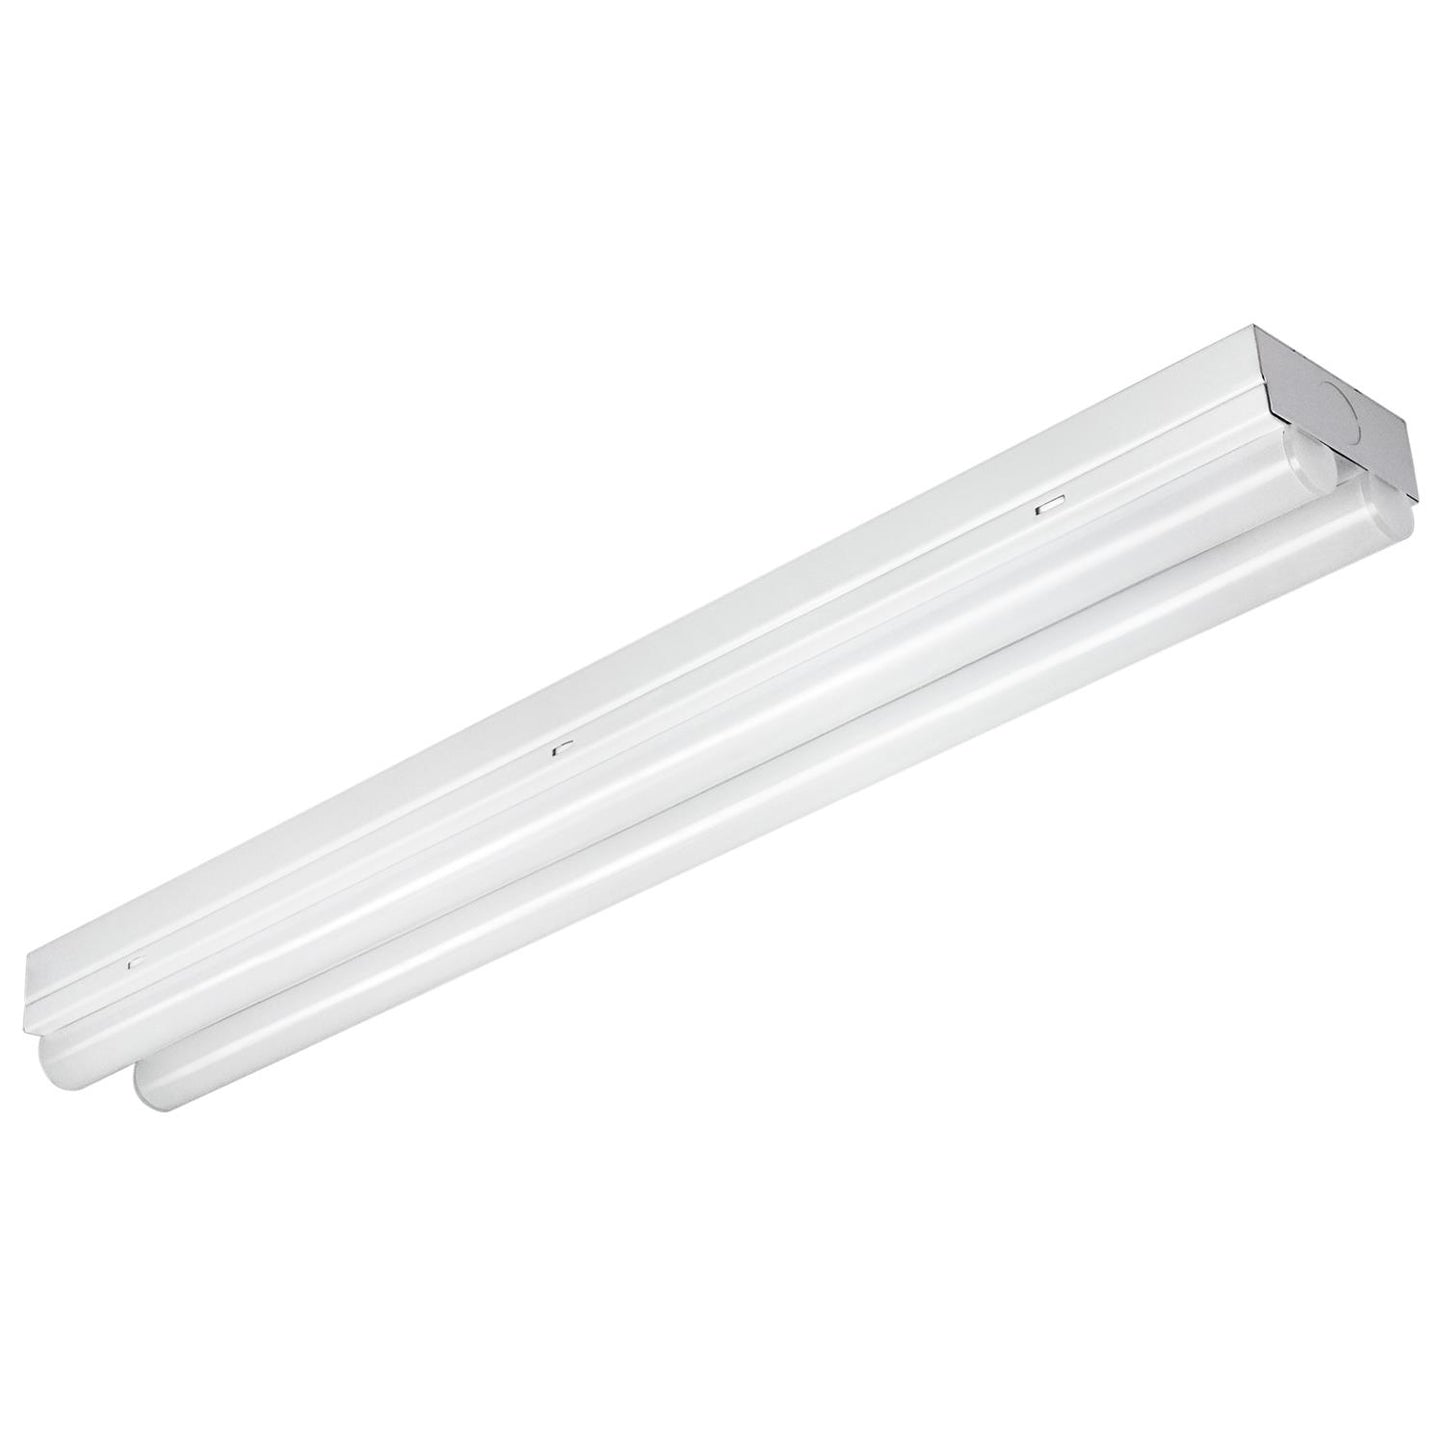 Sunlite LED 24" Linear Dual Strip Fixture, 15 Watts, 3000K Warm White, 1800 Lumen